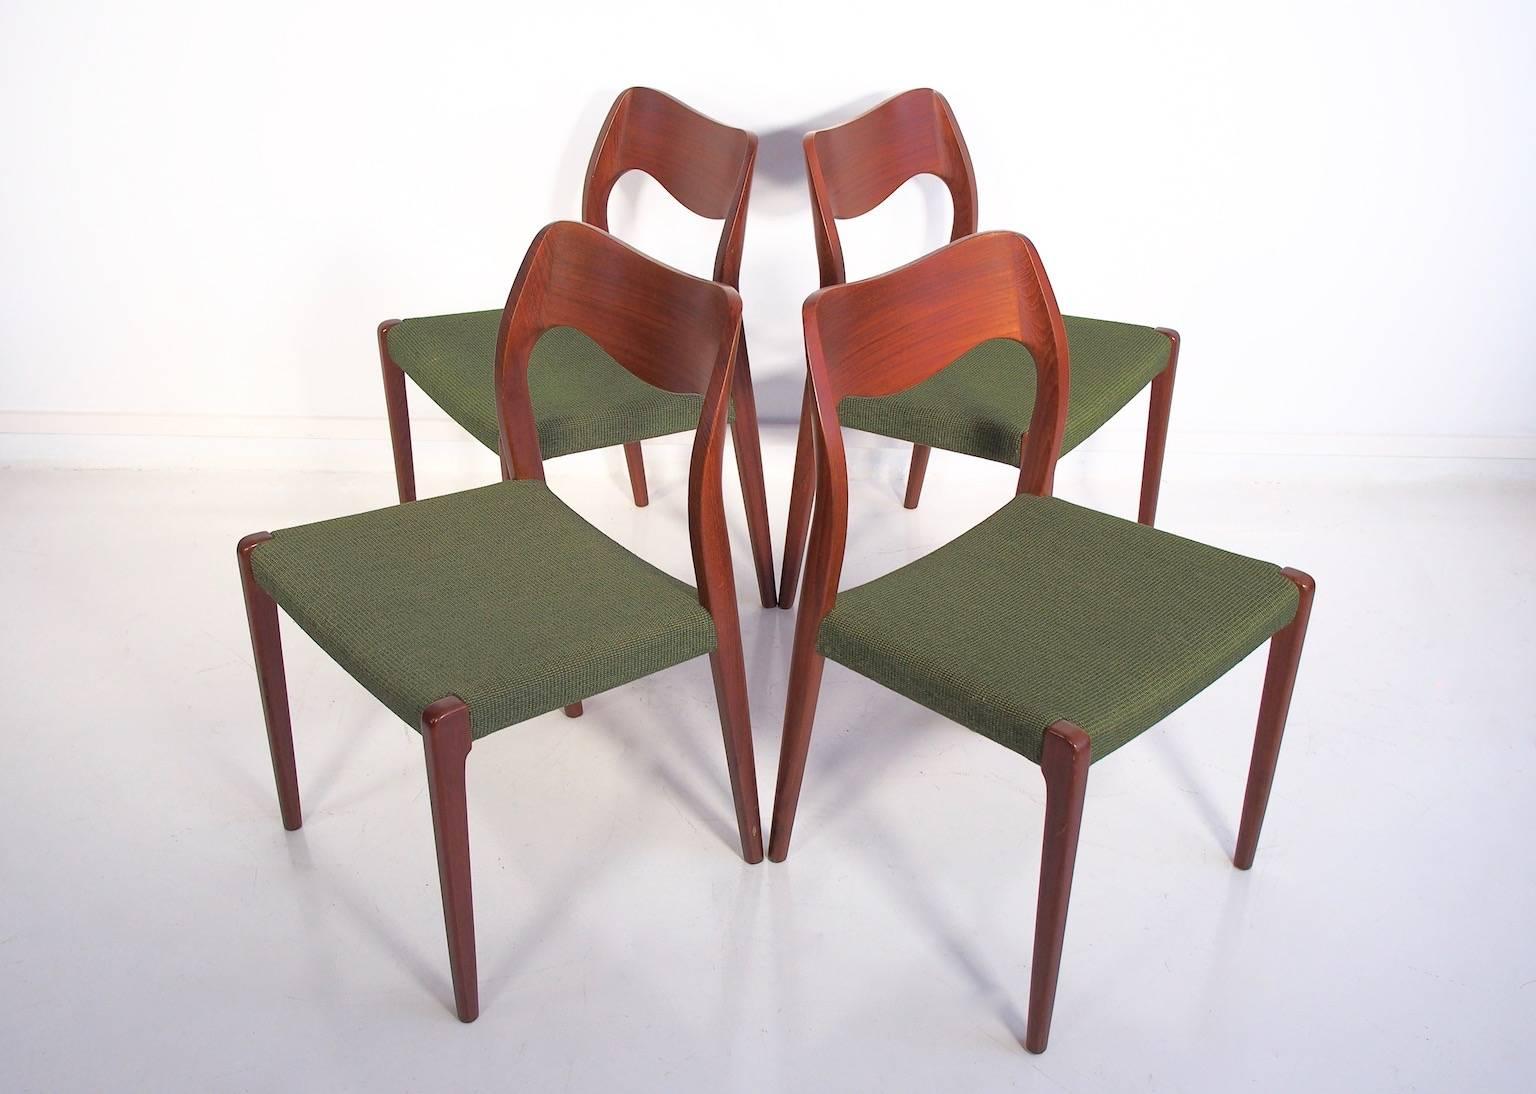 Danish solid teak dining chairs, model 71, by Niels Otto Møller for J. L. Møllers Møbelfabrik. Green wool seat upholstery. Designed in 1951.